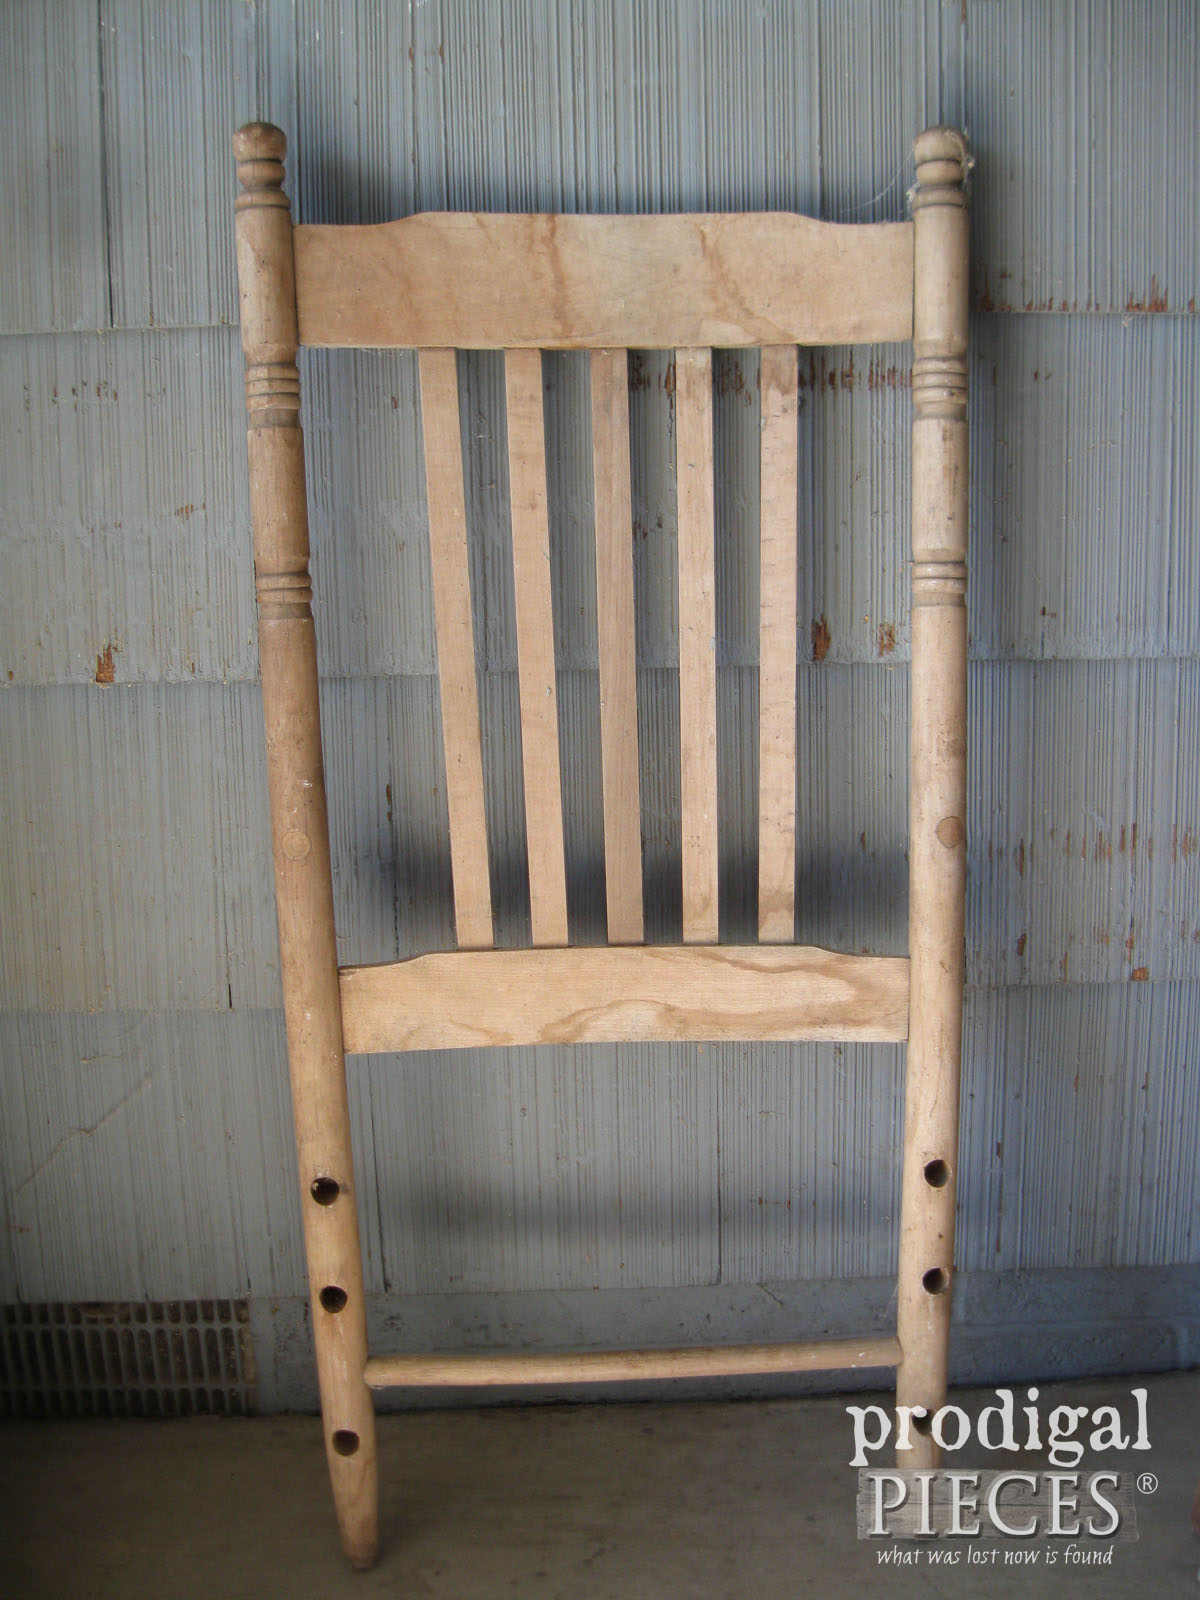 Broken Chair Before Repurposed Shelf | Prodigal Pieces | www.prodigalpieces.com